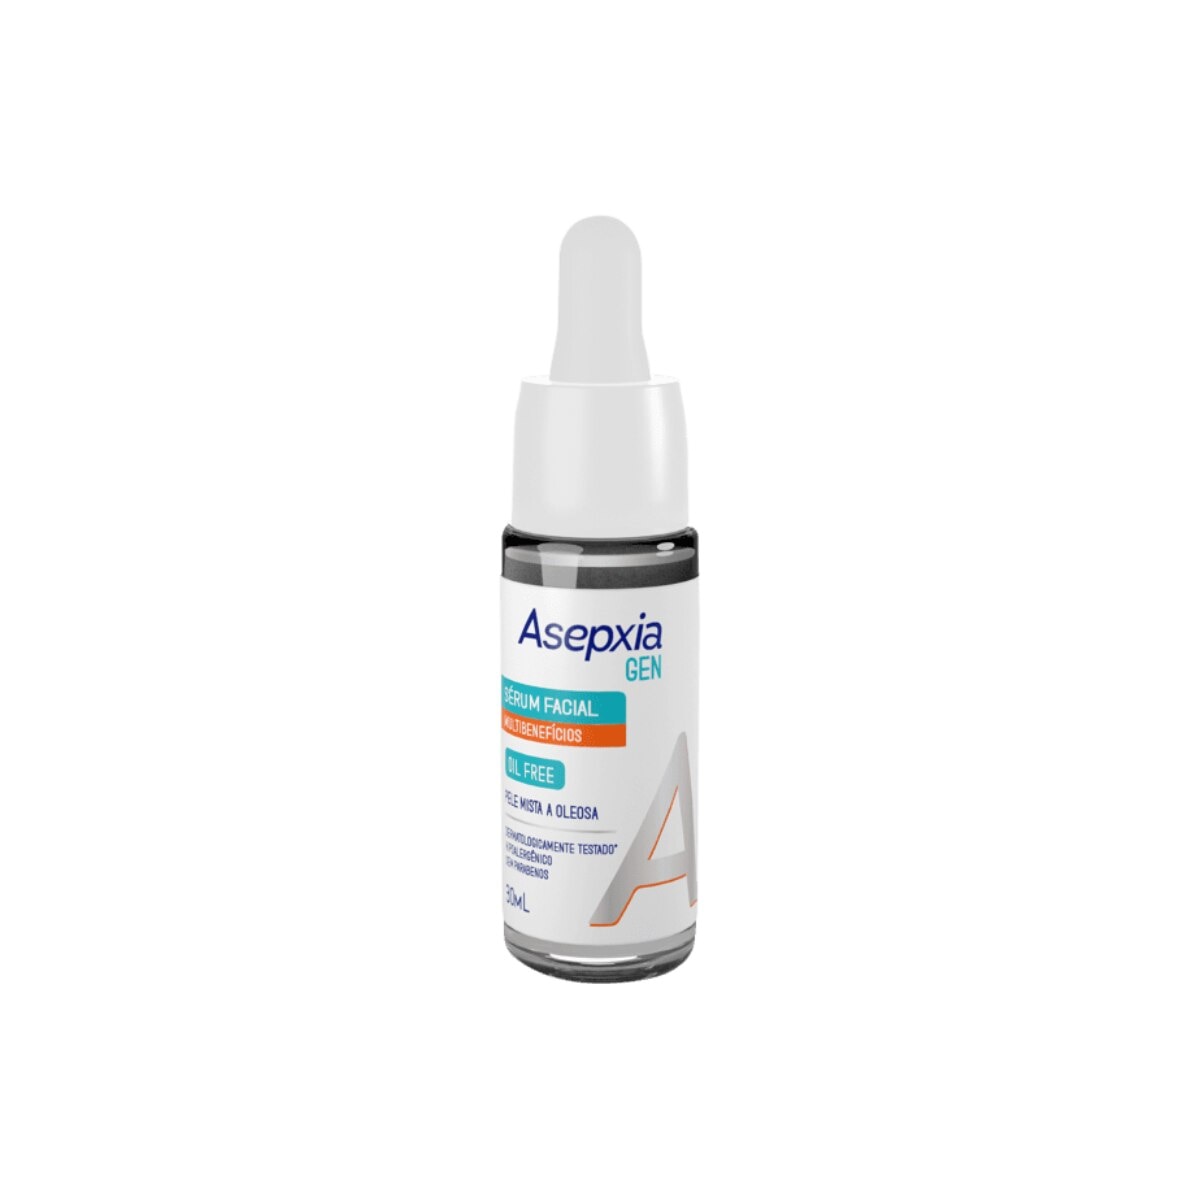 Serum Facial Asepxia Gen Oil Free 30ml